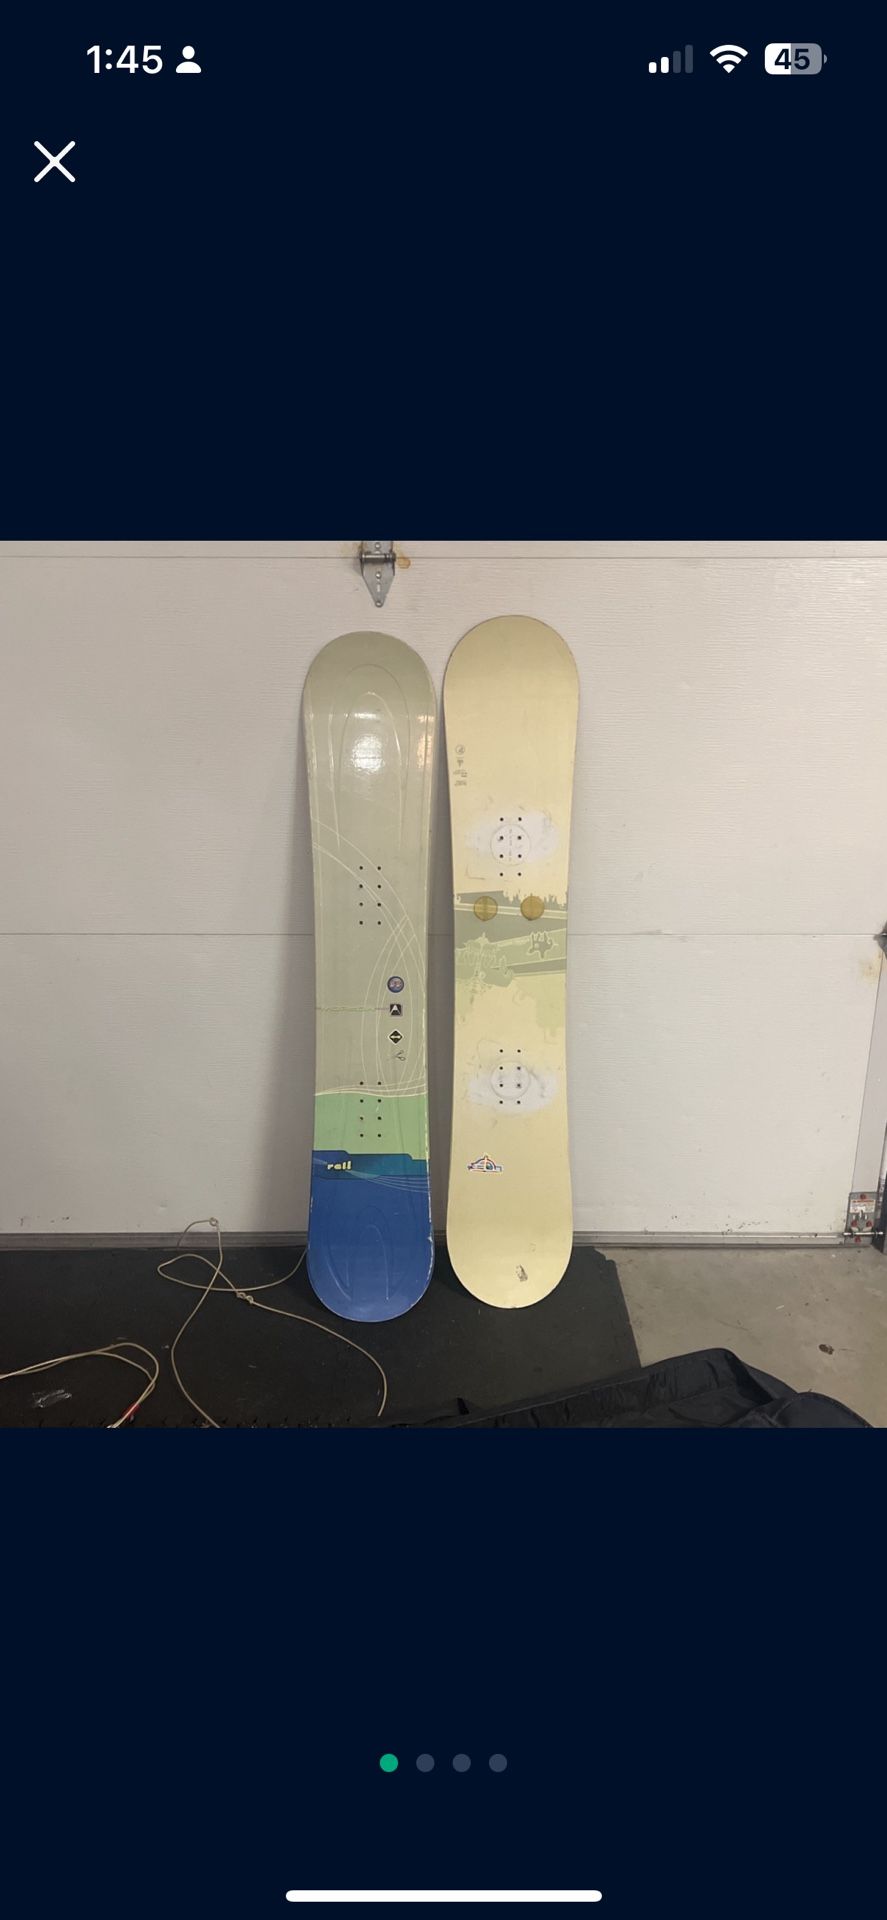  3 snowboards plus wake board and board bag